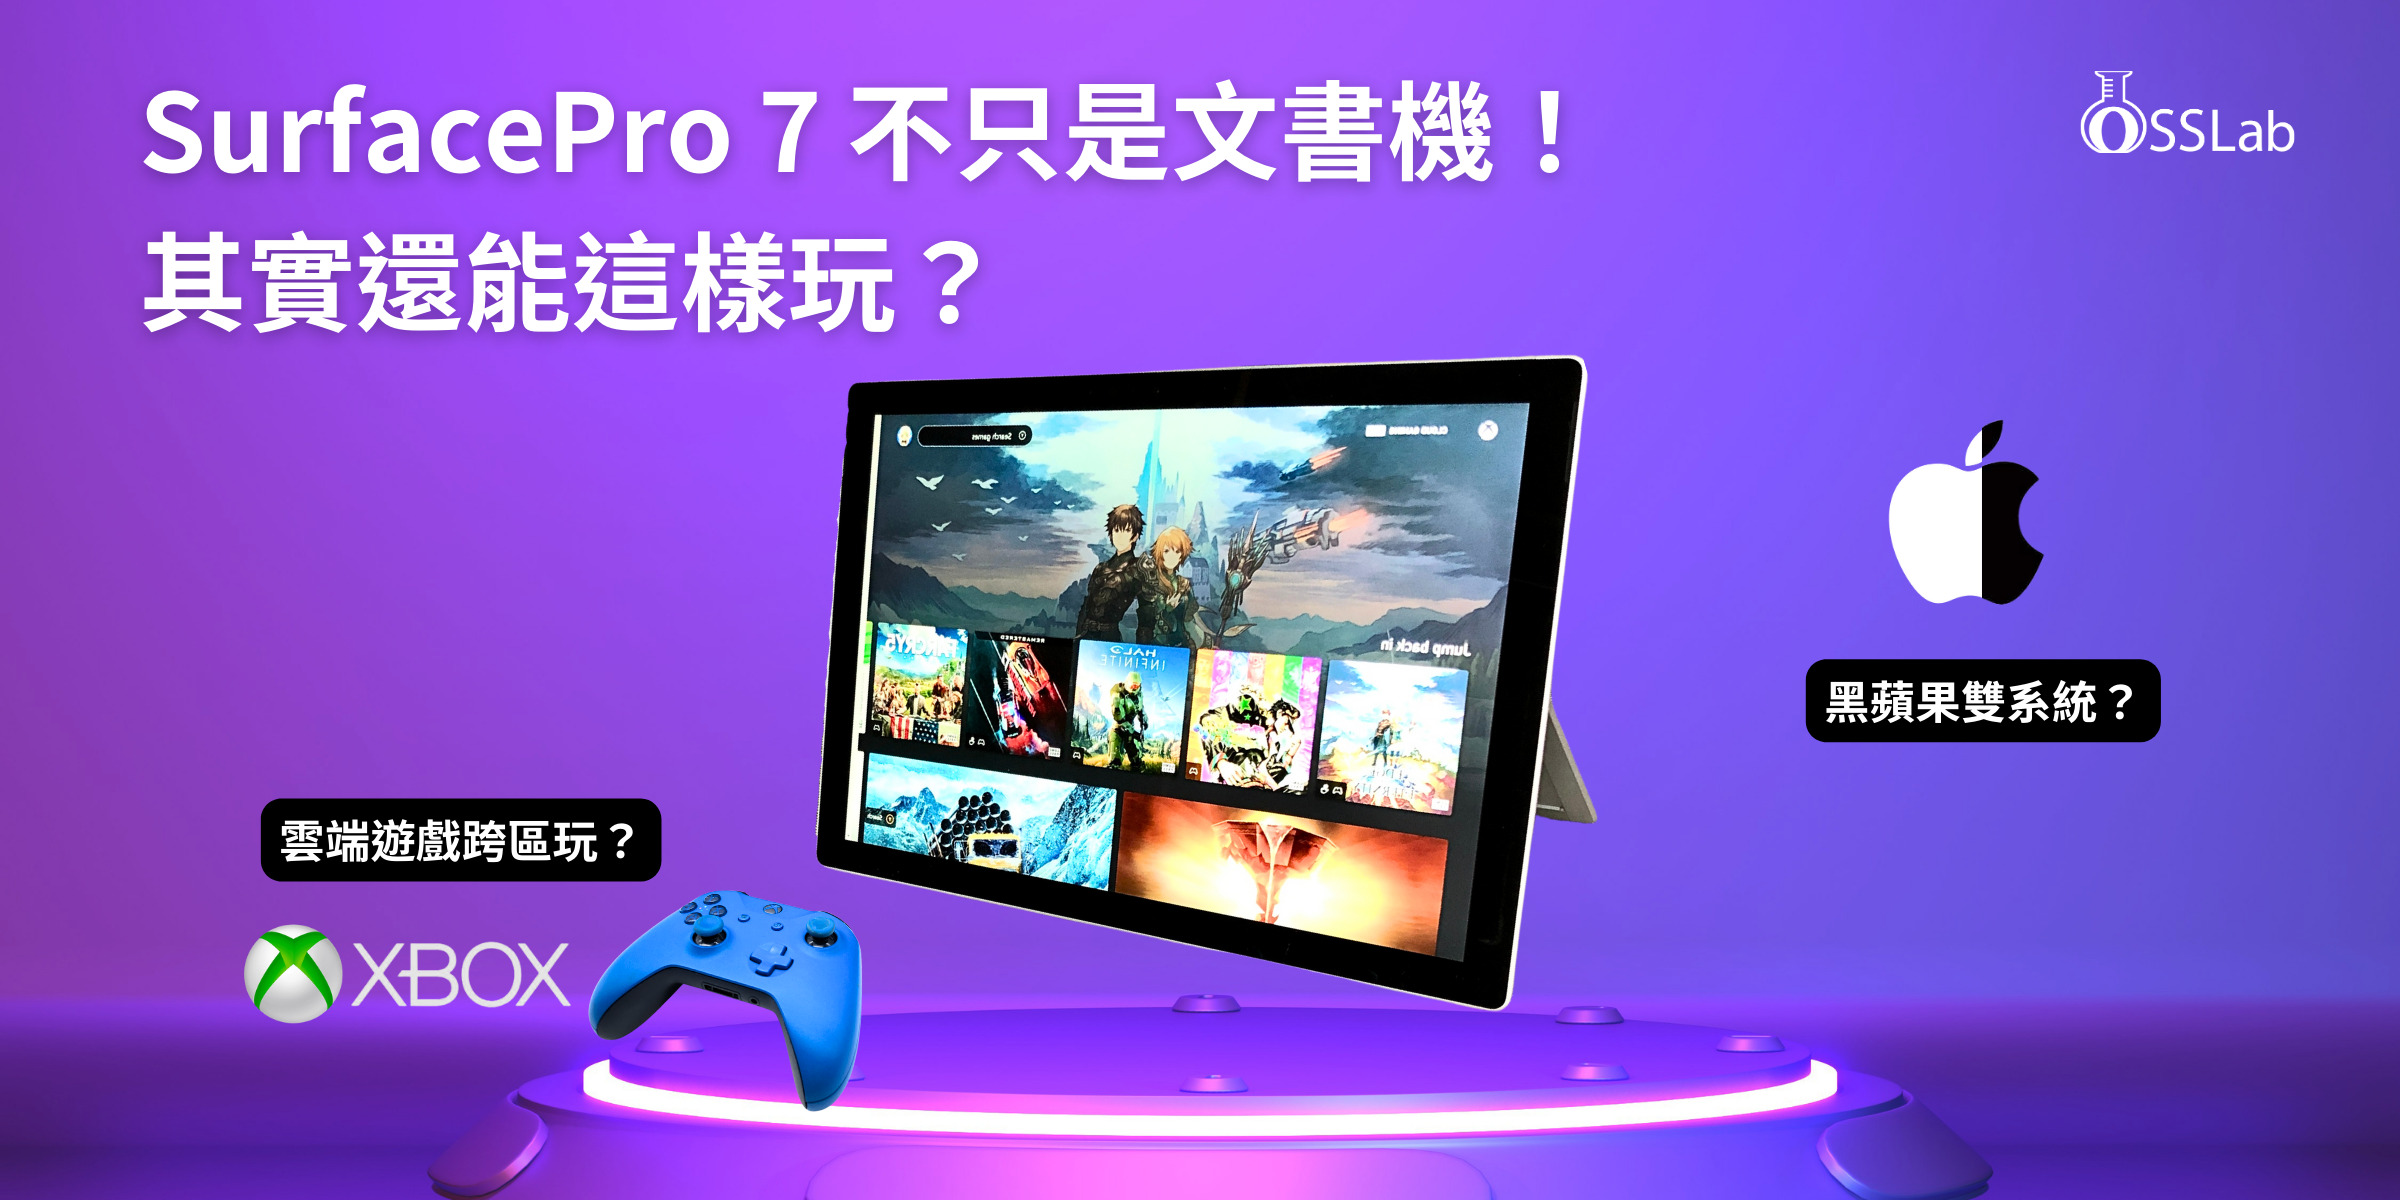 Surface Pro 7 好像不只是辦公機耶! 也能拿來當遊戲機和與Mac機! XD